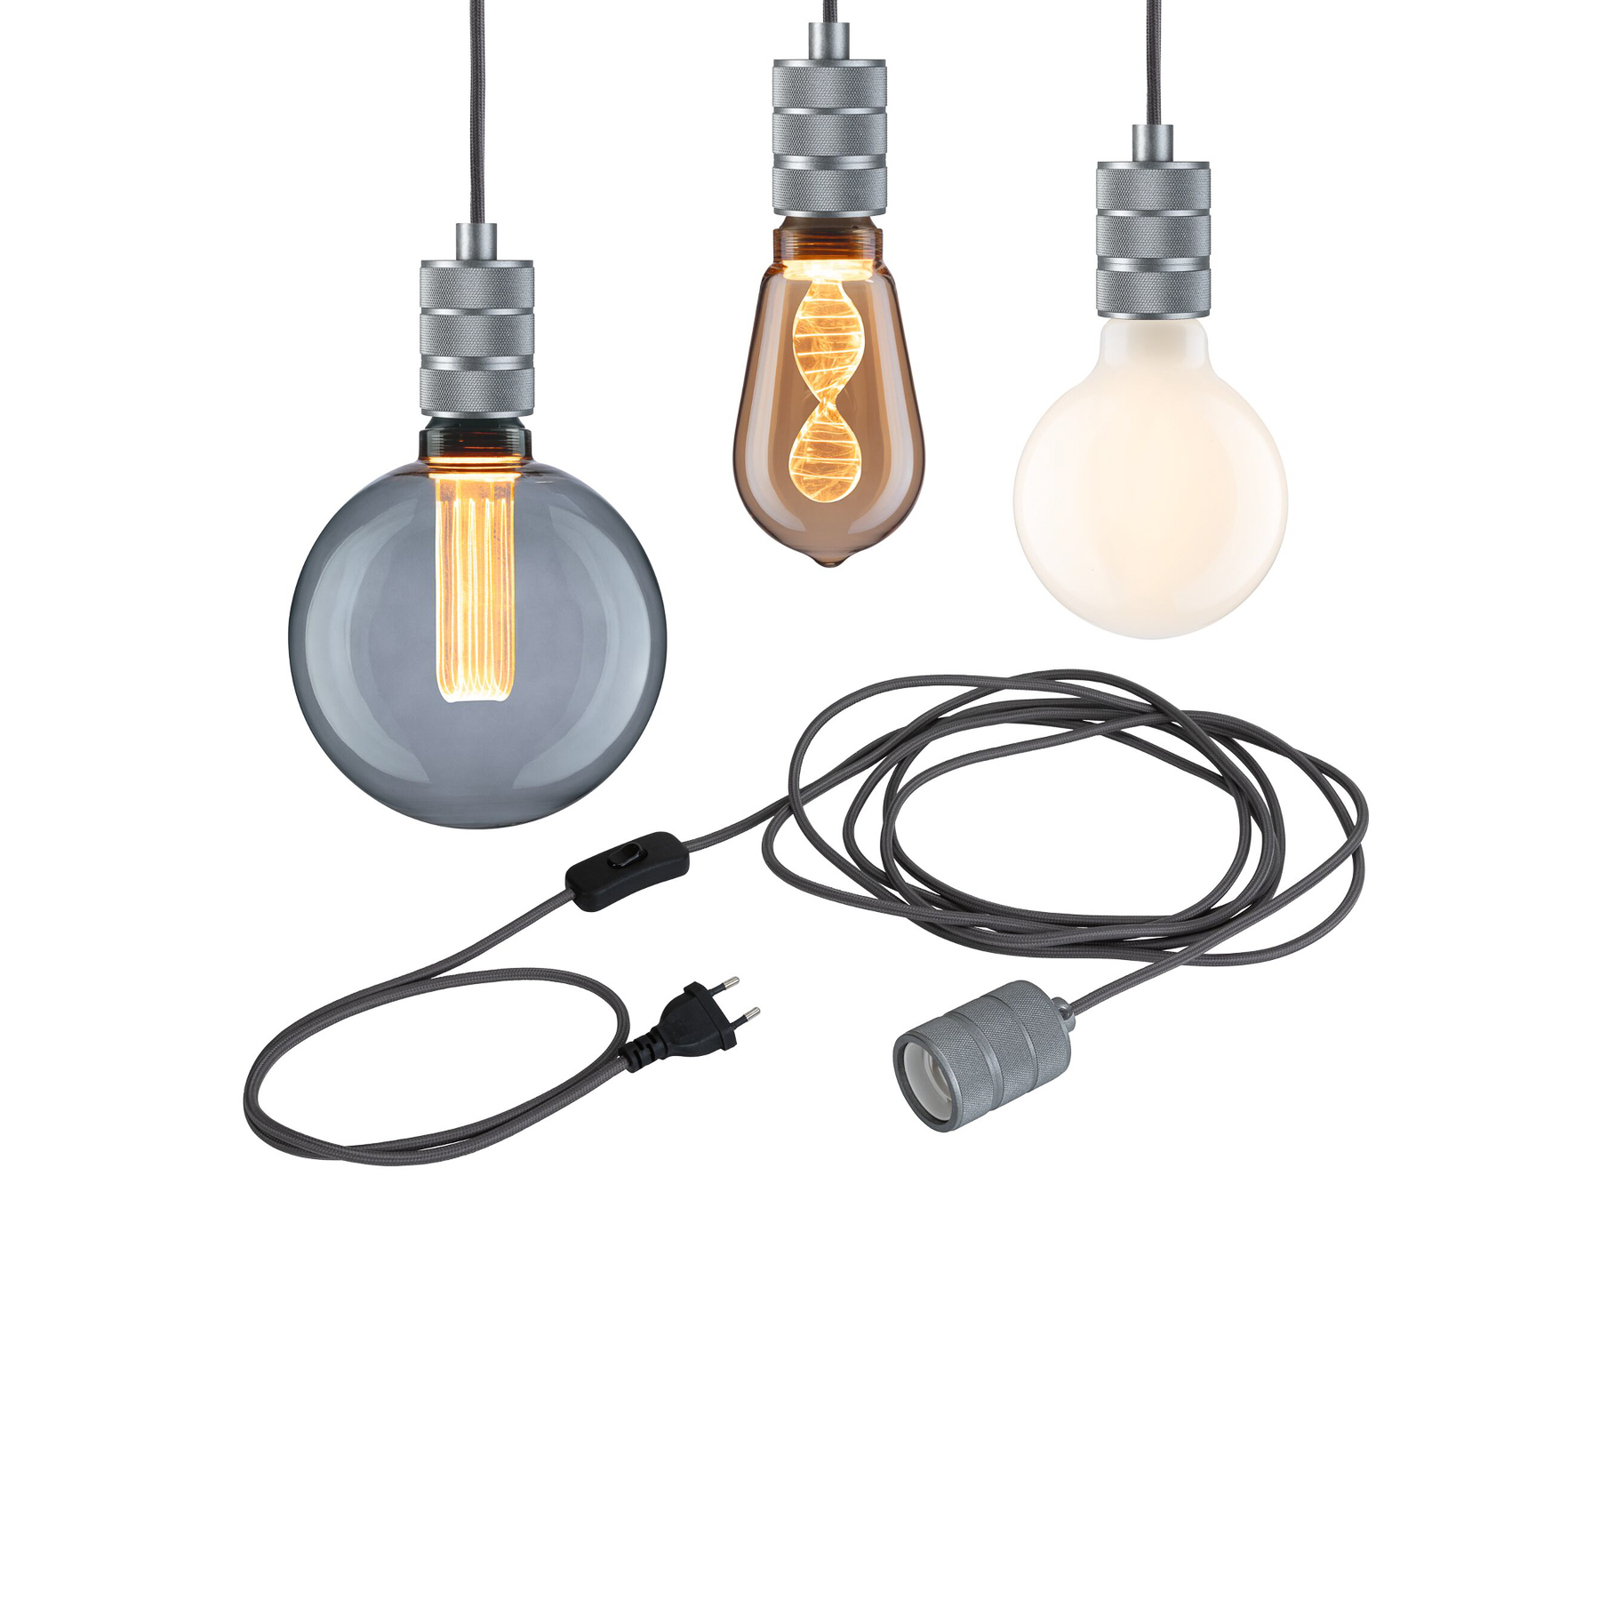 Paulmann Neordic Tilla hanging light plug alu